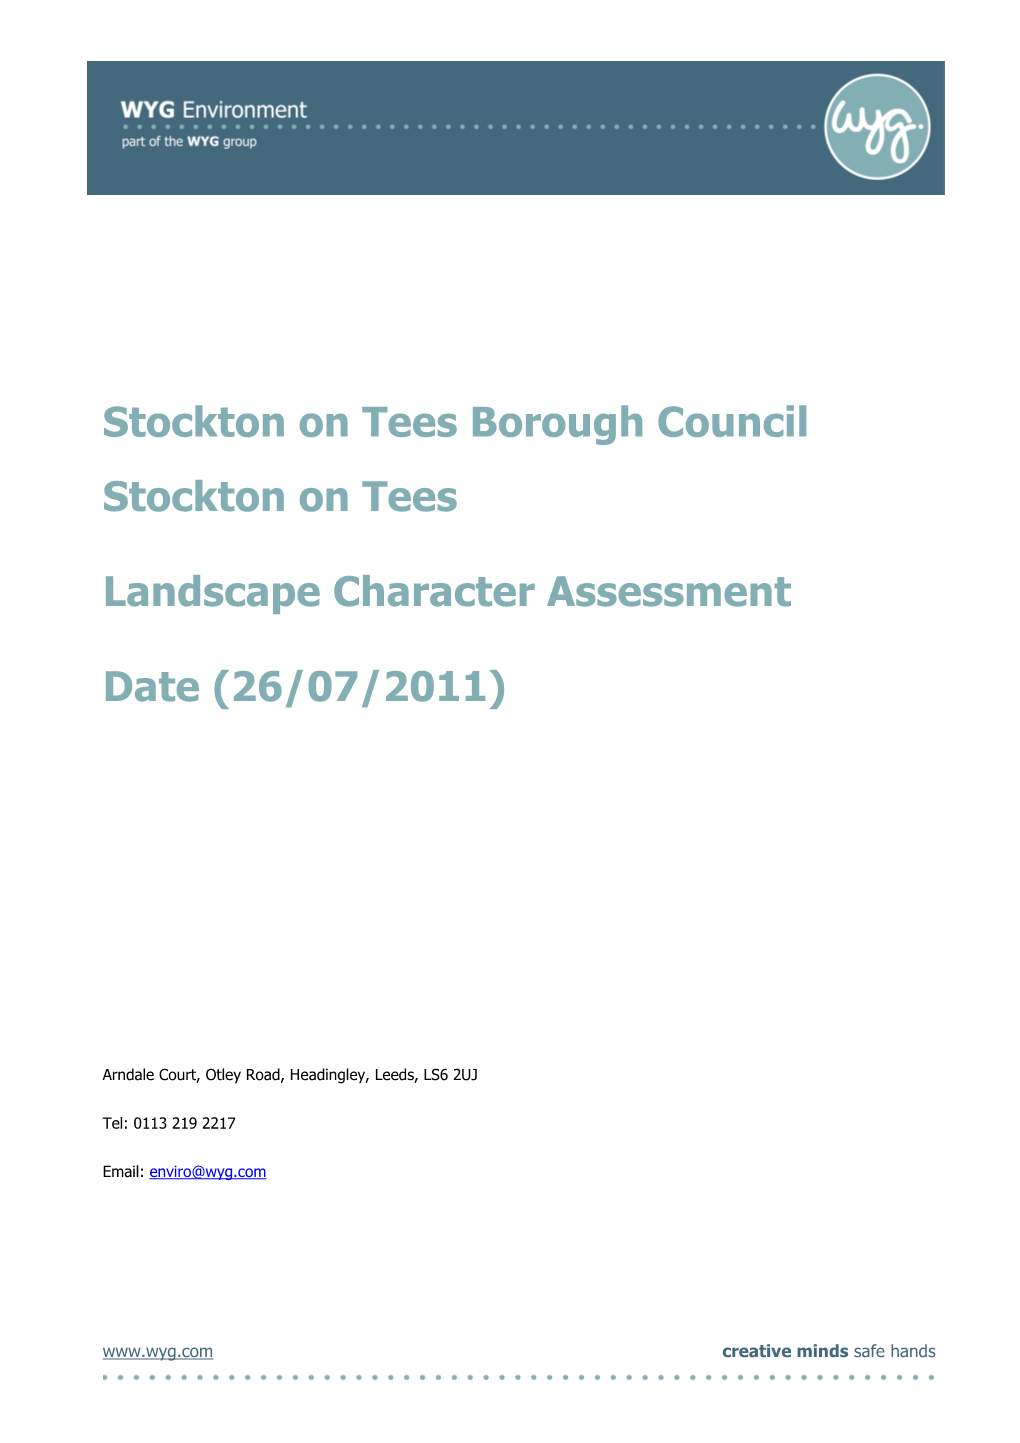 Landscape Character Assessment Report